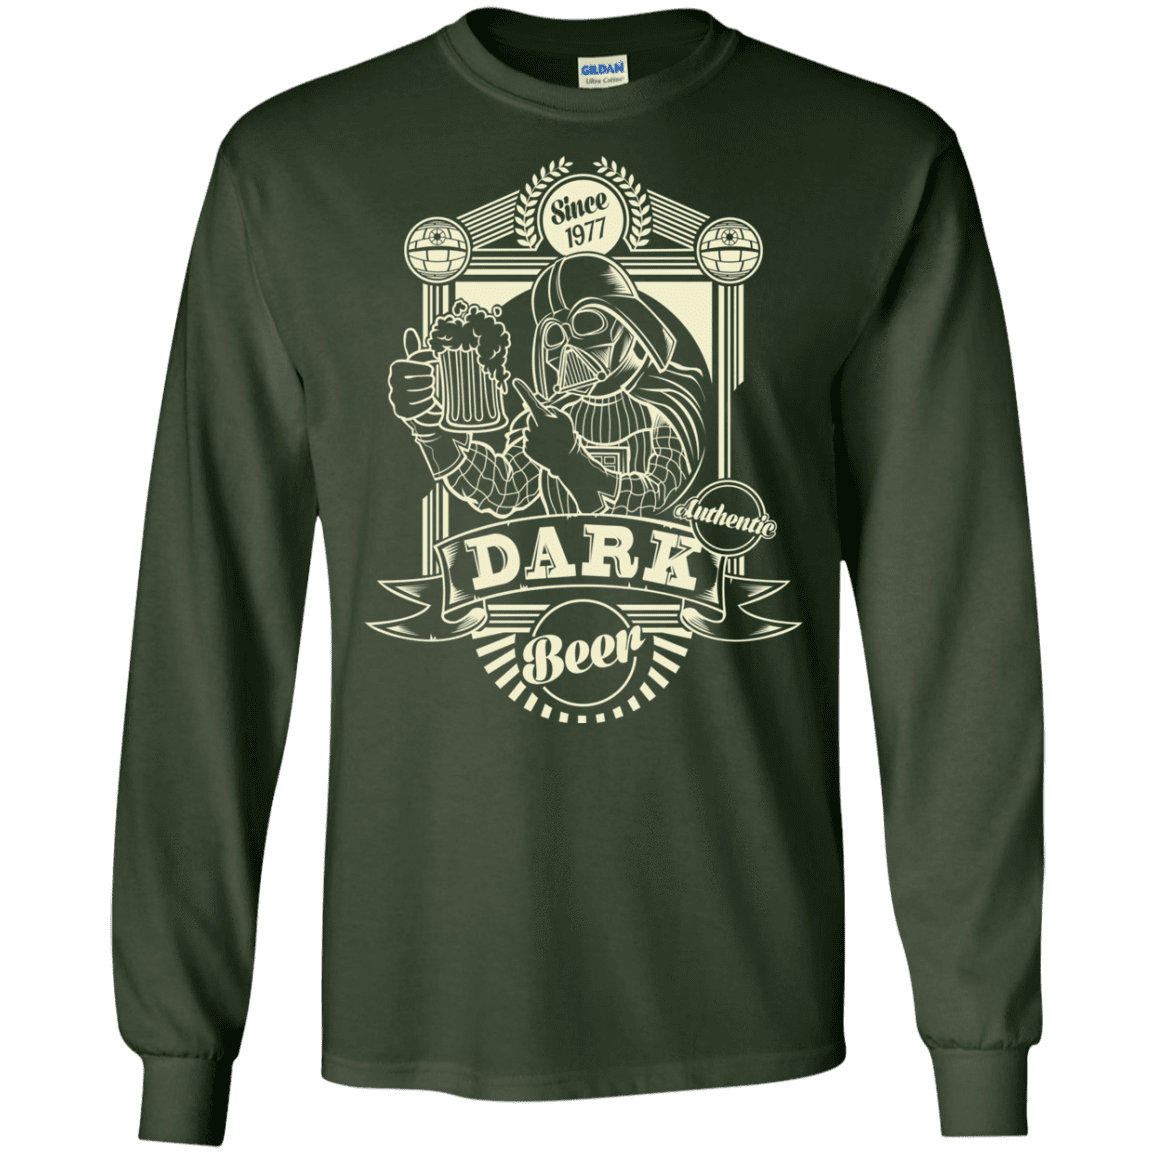 T-Shirts Forest Green / S Dark Beer Men's Long Sleeve T-Shirt